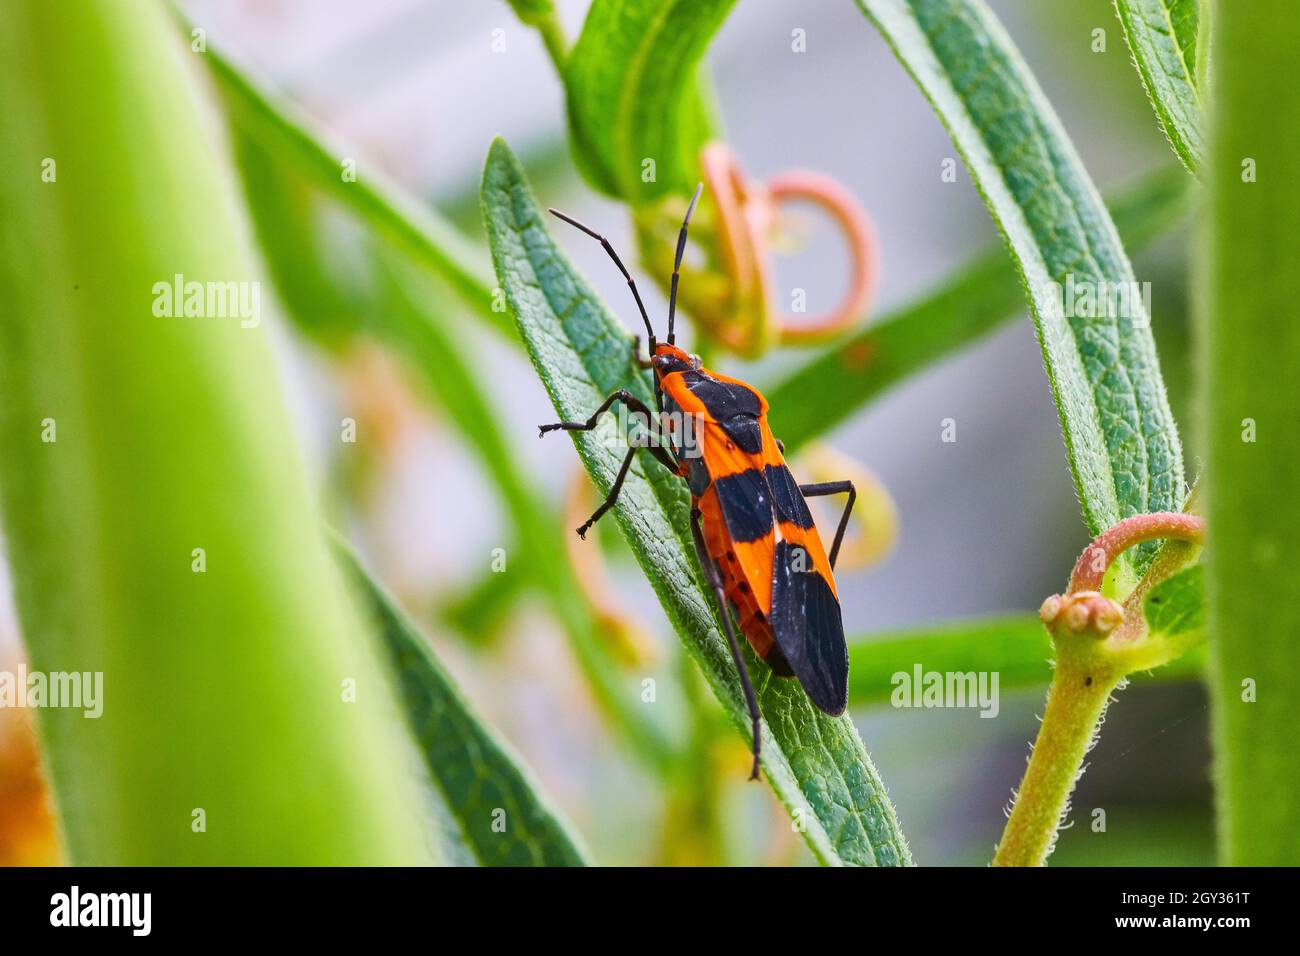 Detail of orange and black spotted milkweed seed bug Stock Photo